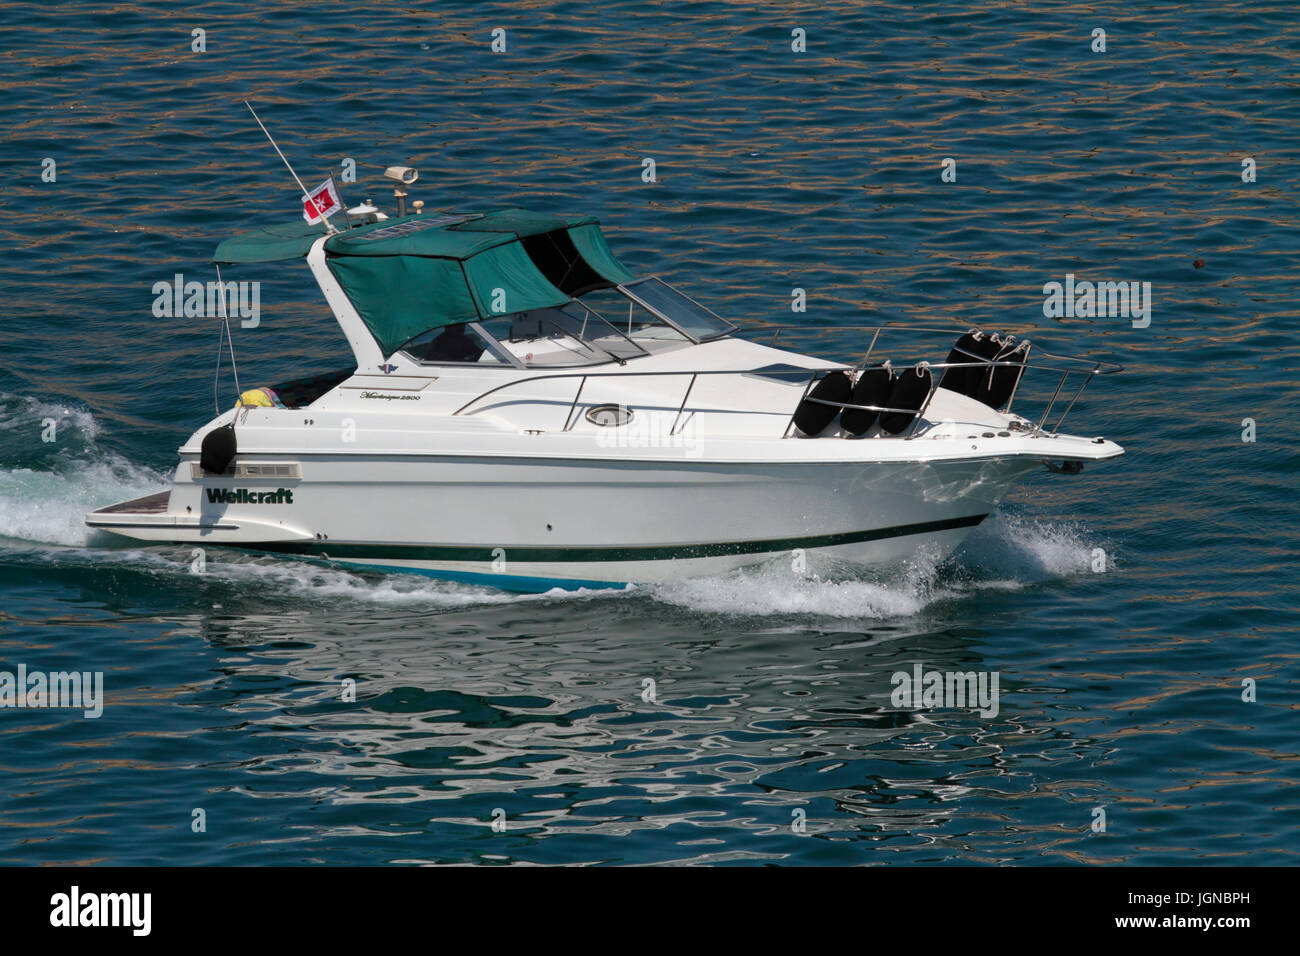 Wellcraft Martinique 2800 motor yacht Stock Photo